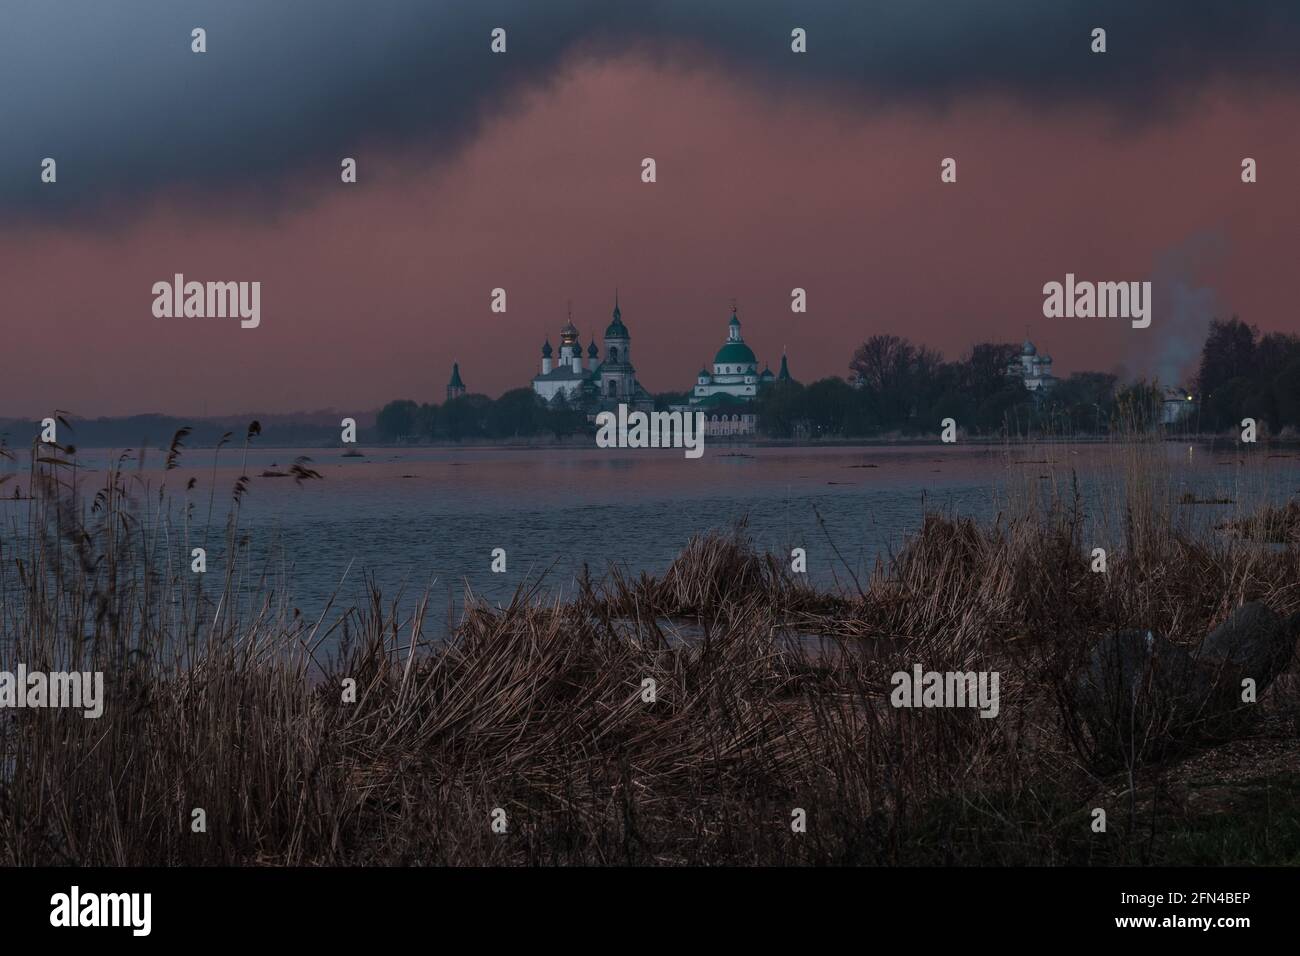 View of Spaso-Yakovlevsky Monastery in Rostov Veliky from Nero's lake on a sunset. Stock Photo